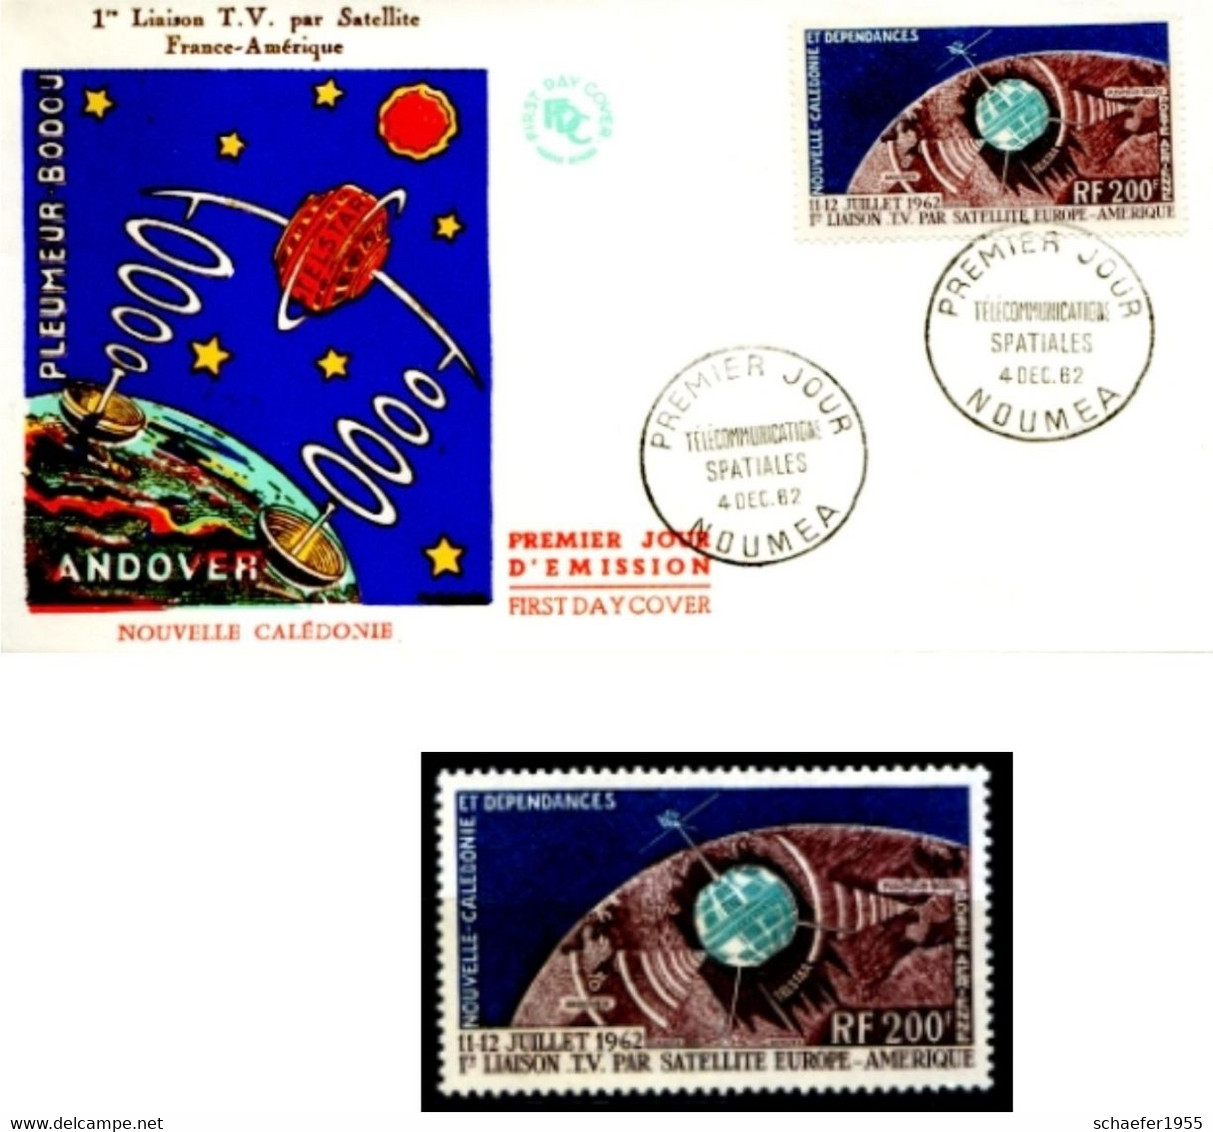 Nouvelle Caledonie, Neukaledonien, New Caledonia 1962 Telstar Satelite FDC + Stamp - Oceania